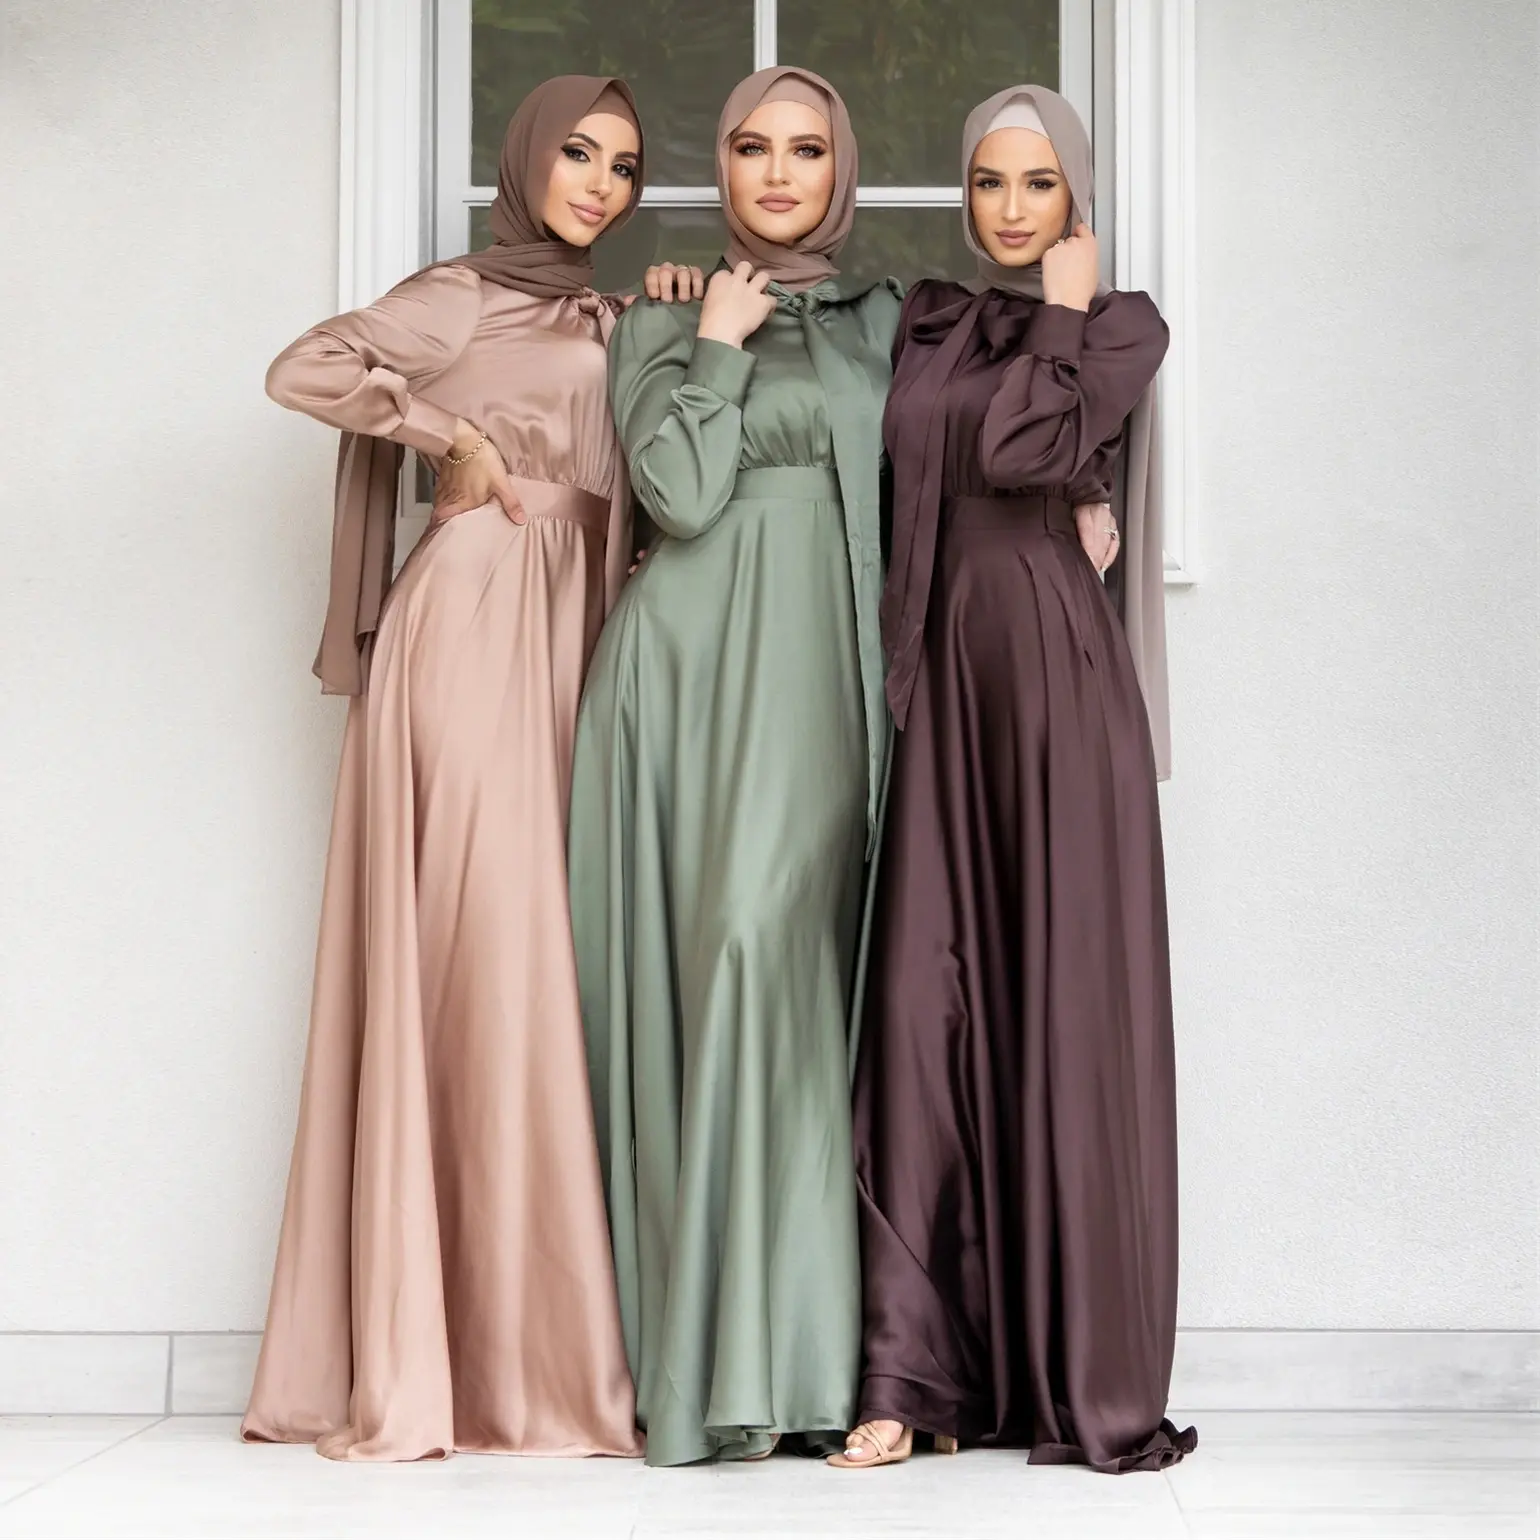 YWQS mujer transpirable ligero poliéster Abaya musulmán moda Swing satén vestido dibujado a mano impresión para adultos